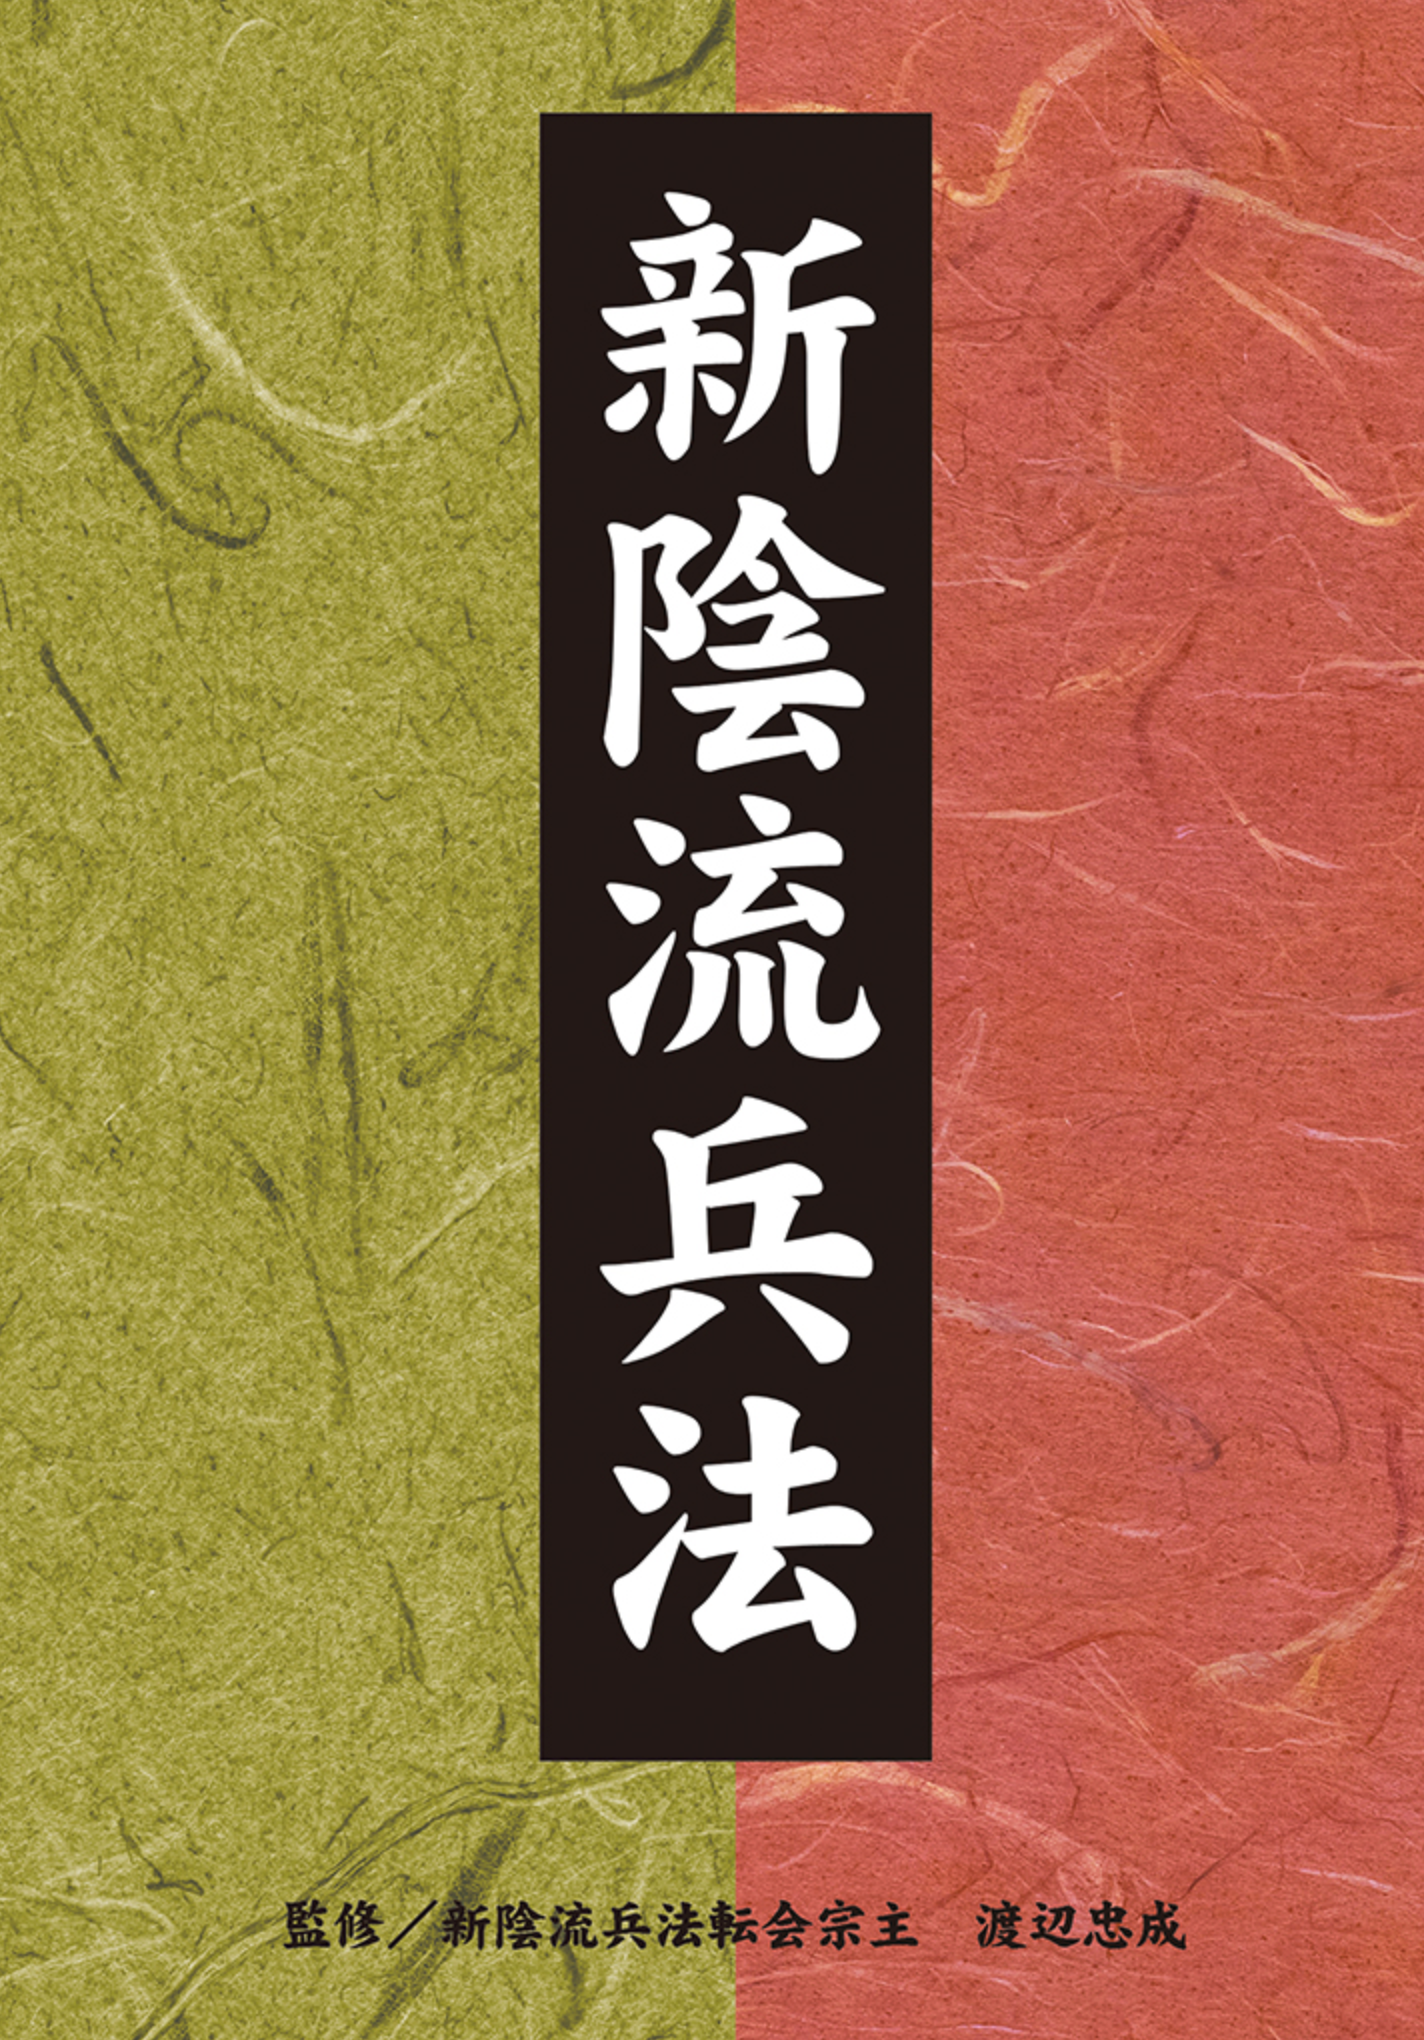 Shinkage Ryu 2 DVD Box Set - Budovideos Inc